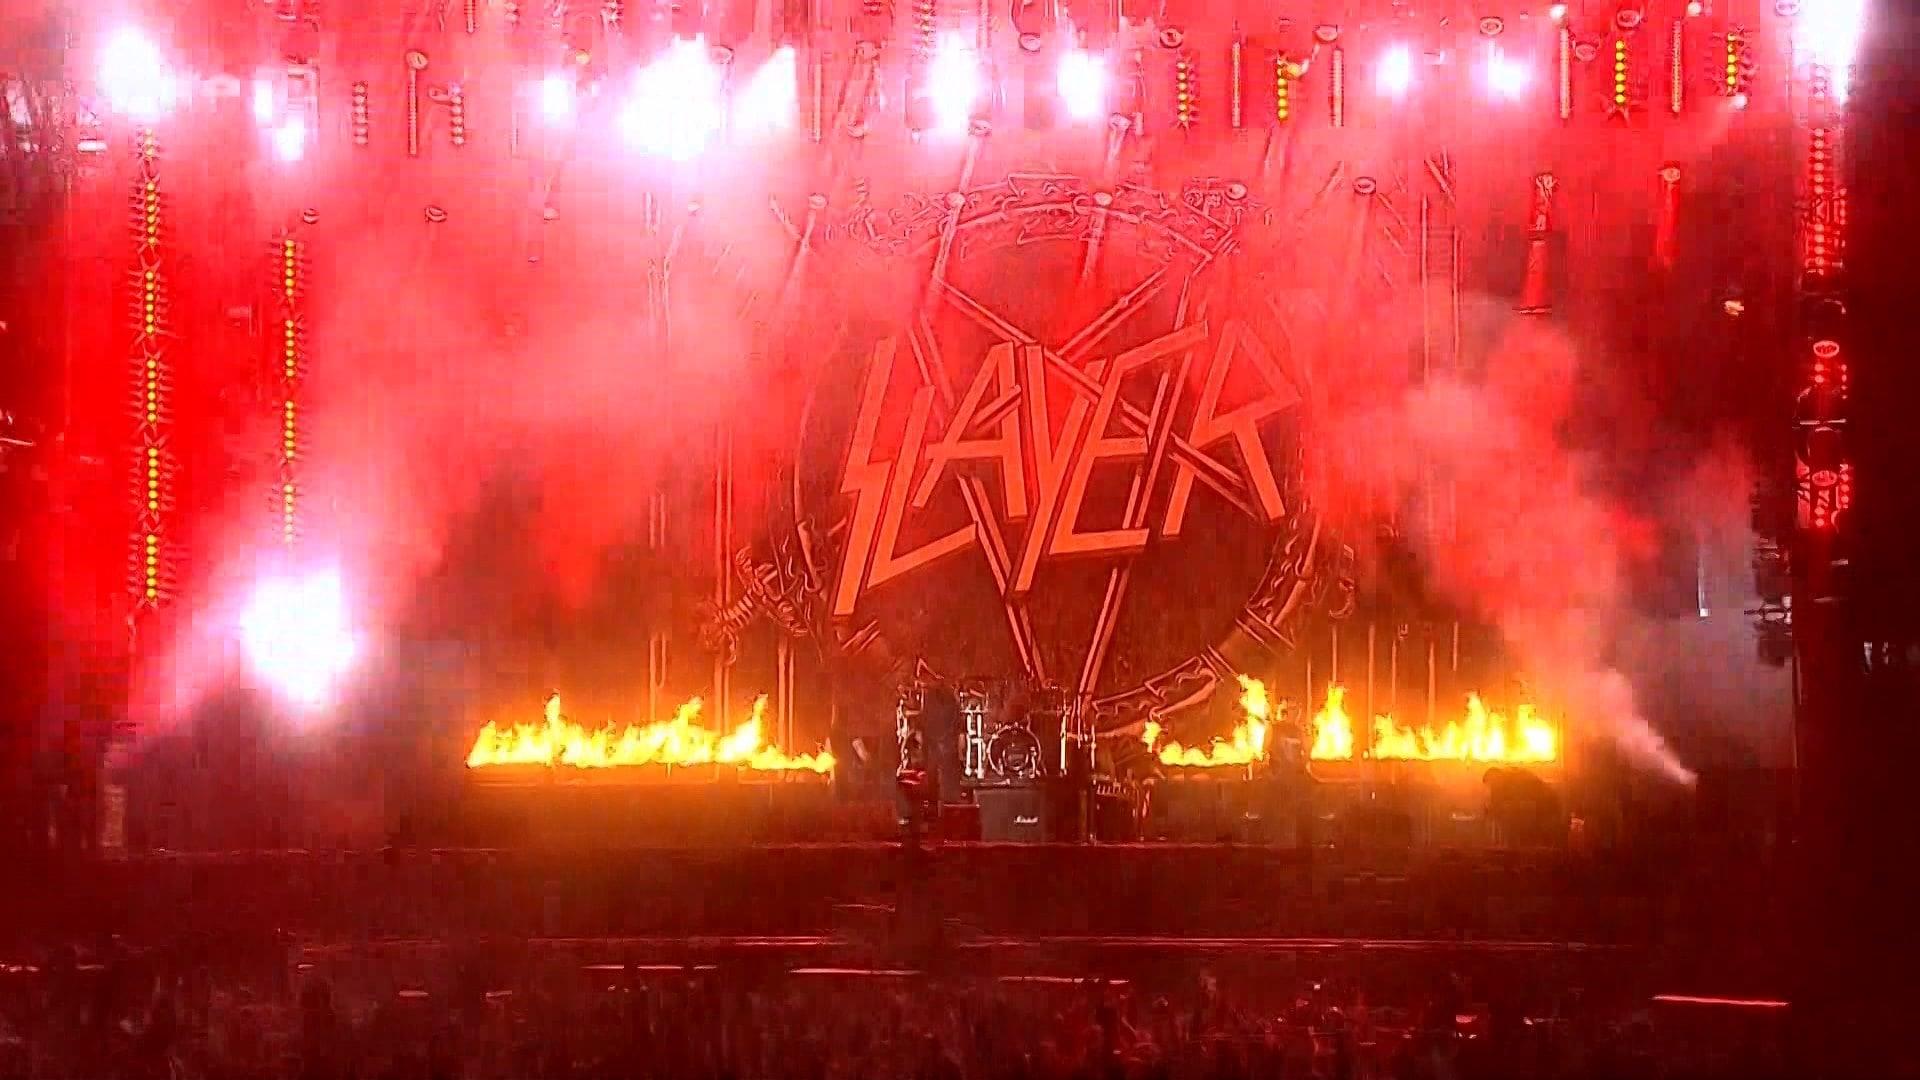 Slayer - Live at Wacken 2014 backdrop